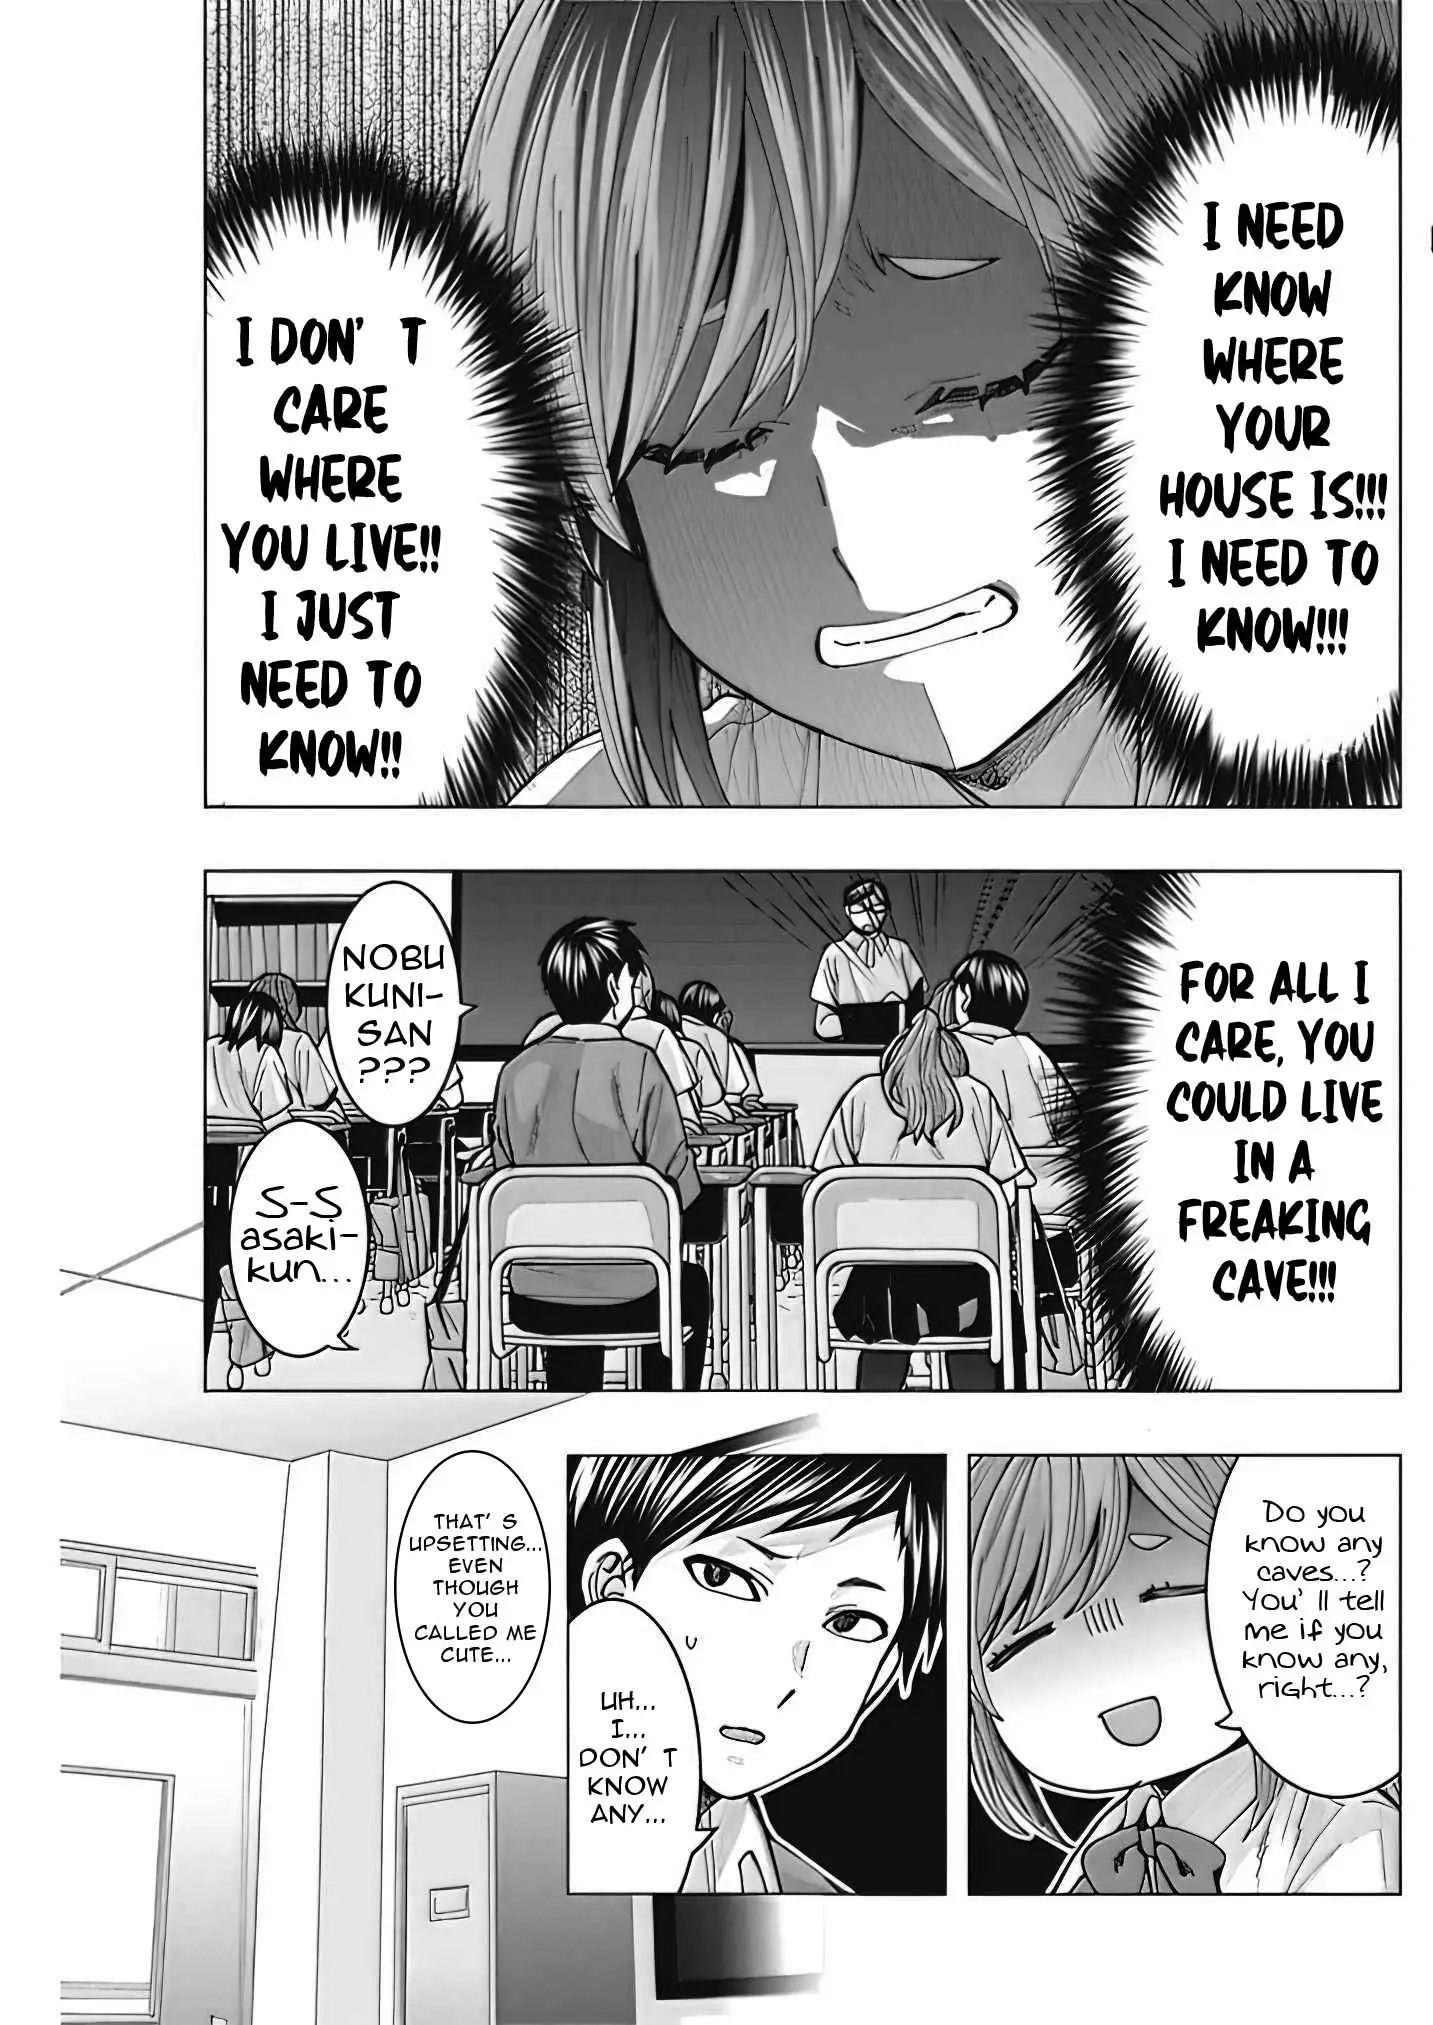 "nobukuni-San" Does She Like Me? - 3 page 8